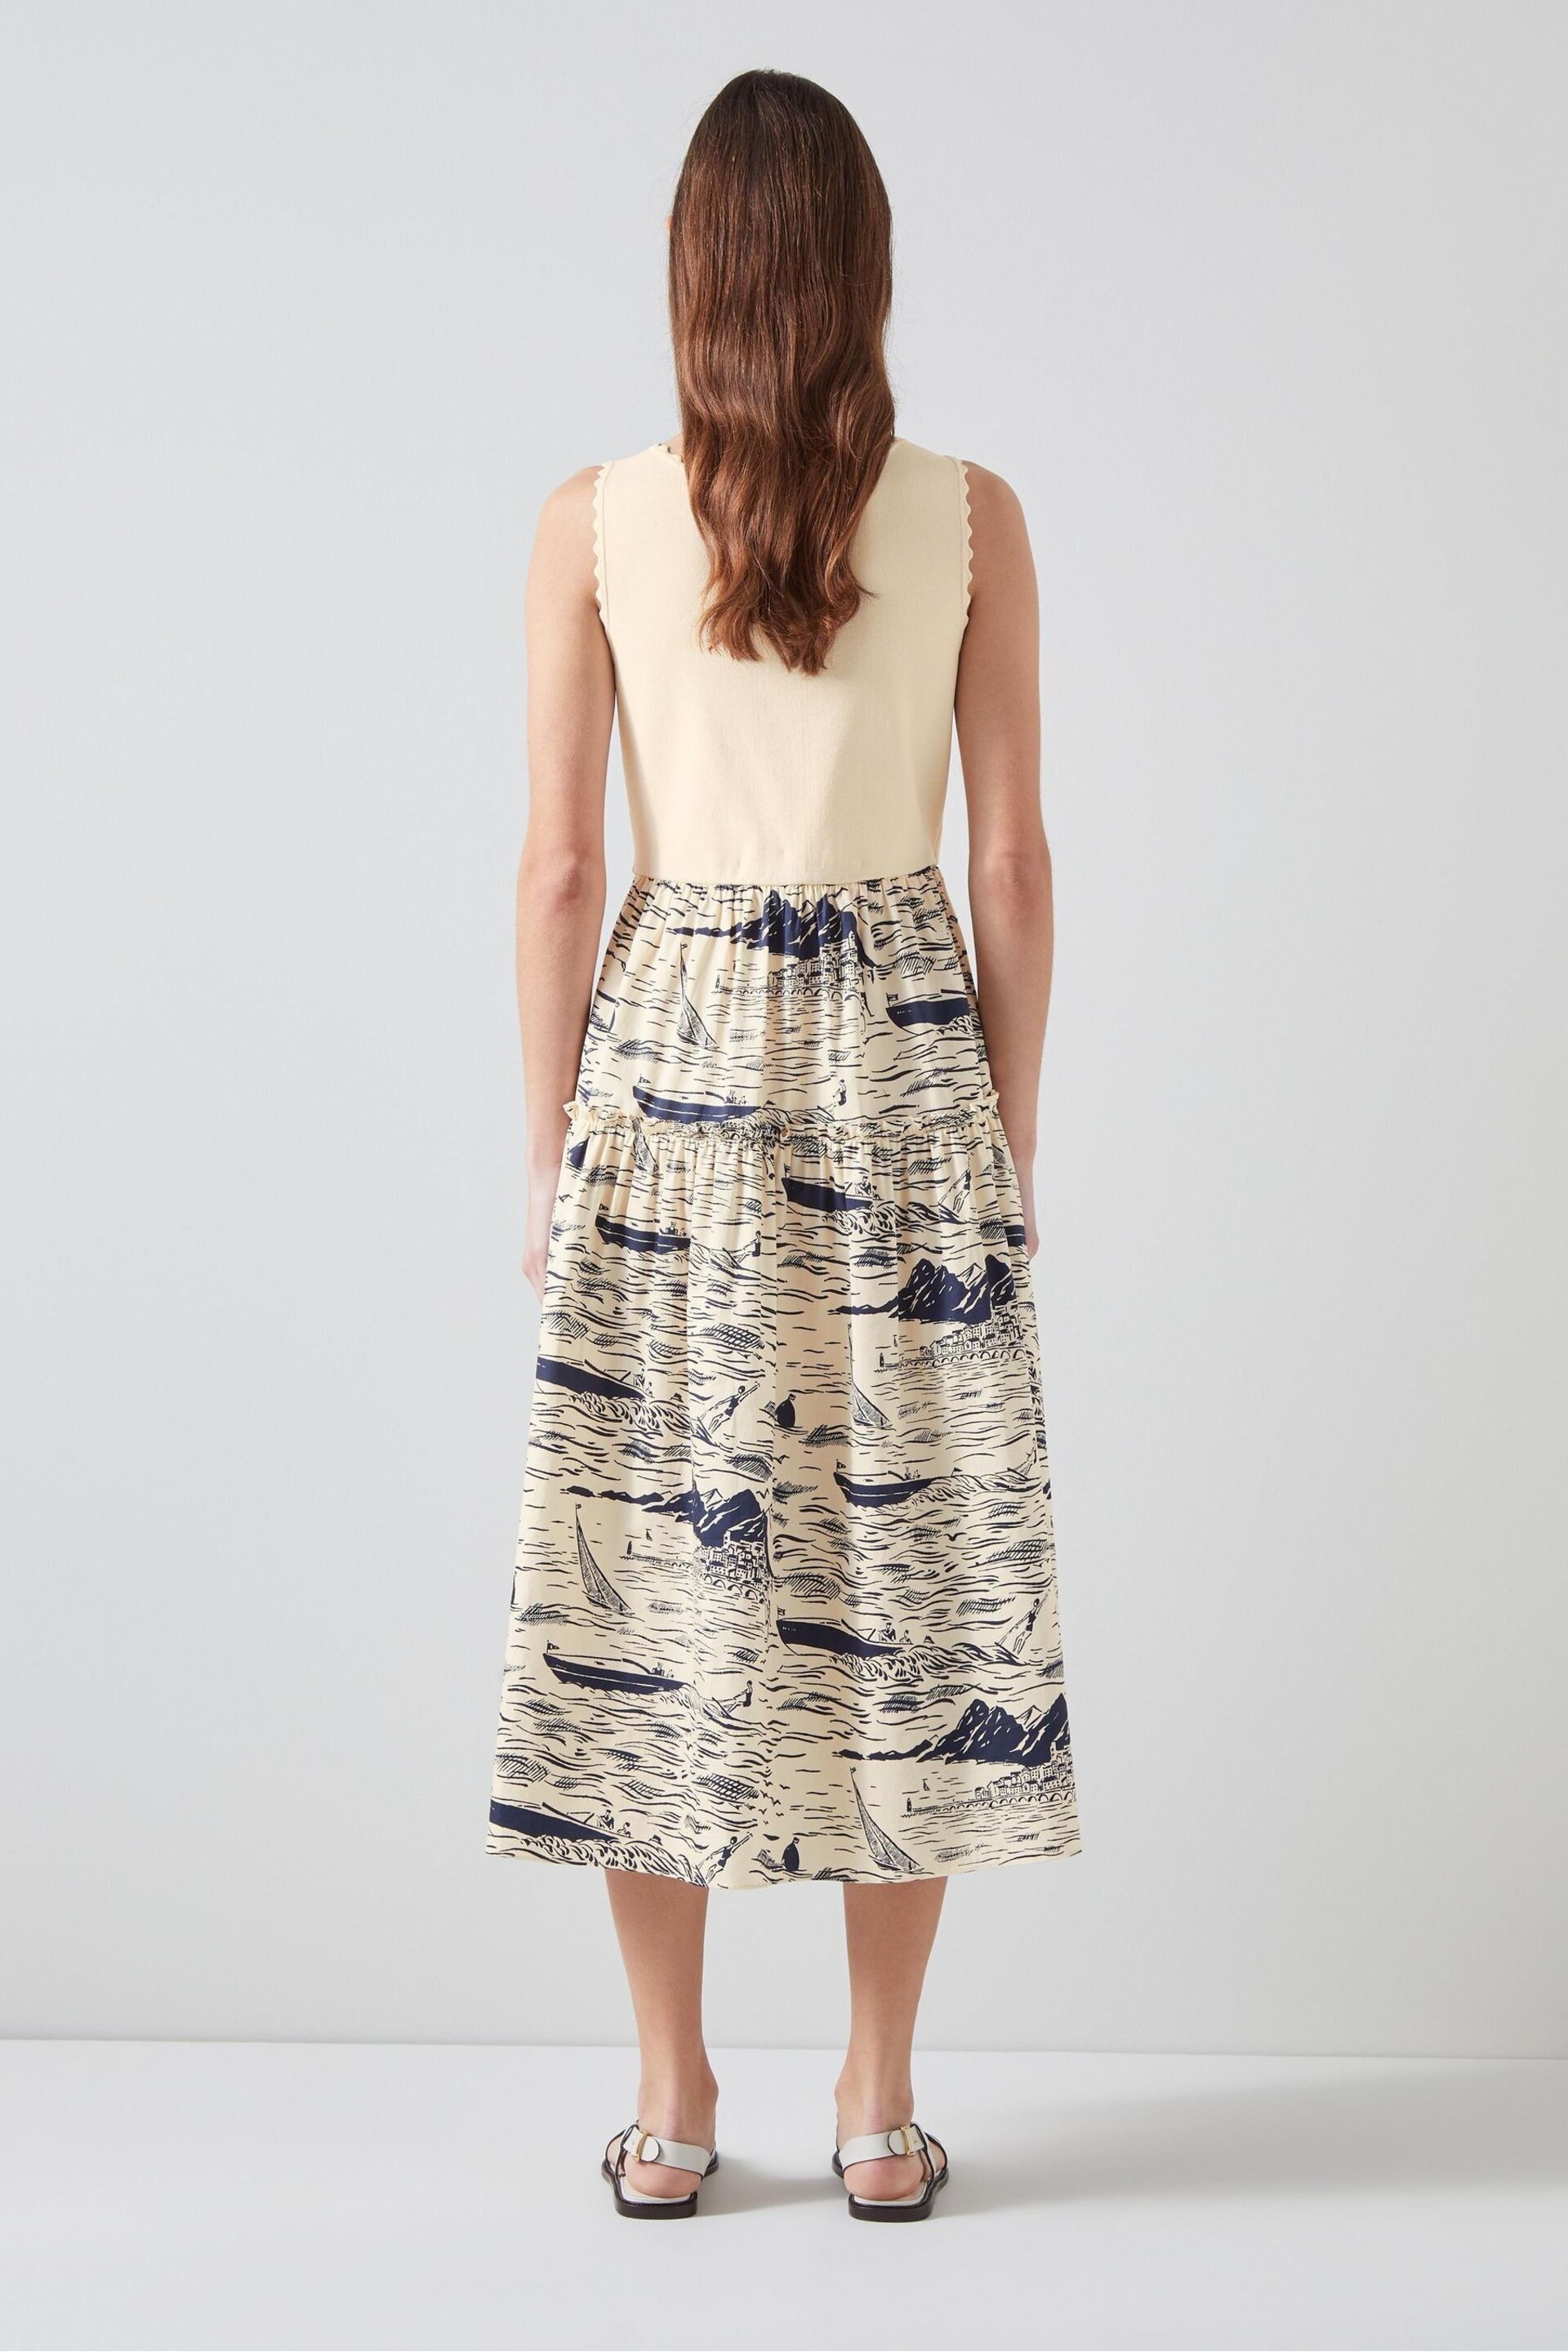 LK Bennett Crosby Cotton Blend Riviera Print Dress - Image 2 of 3